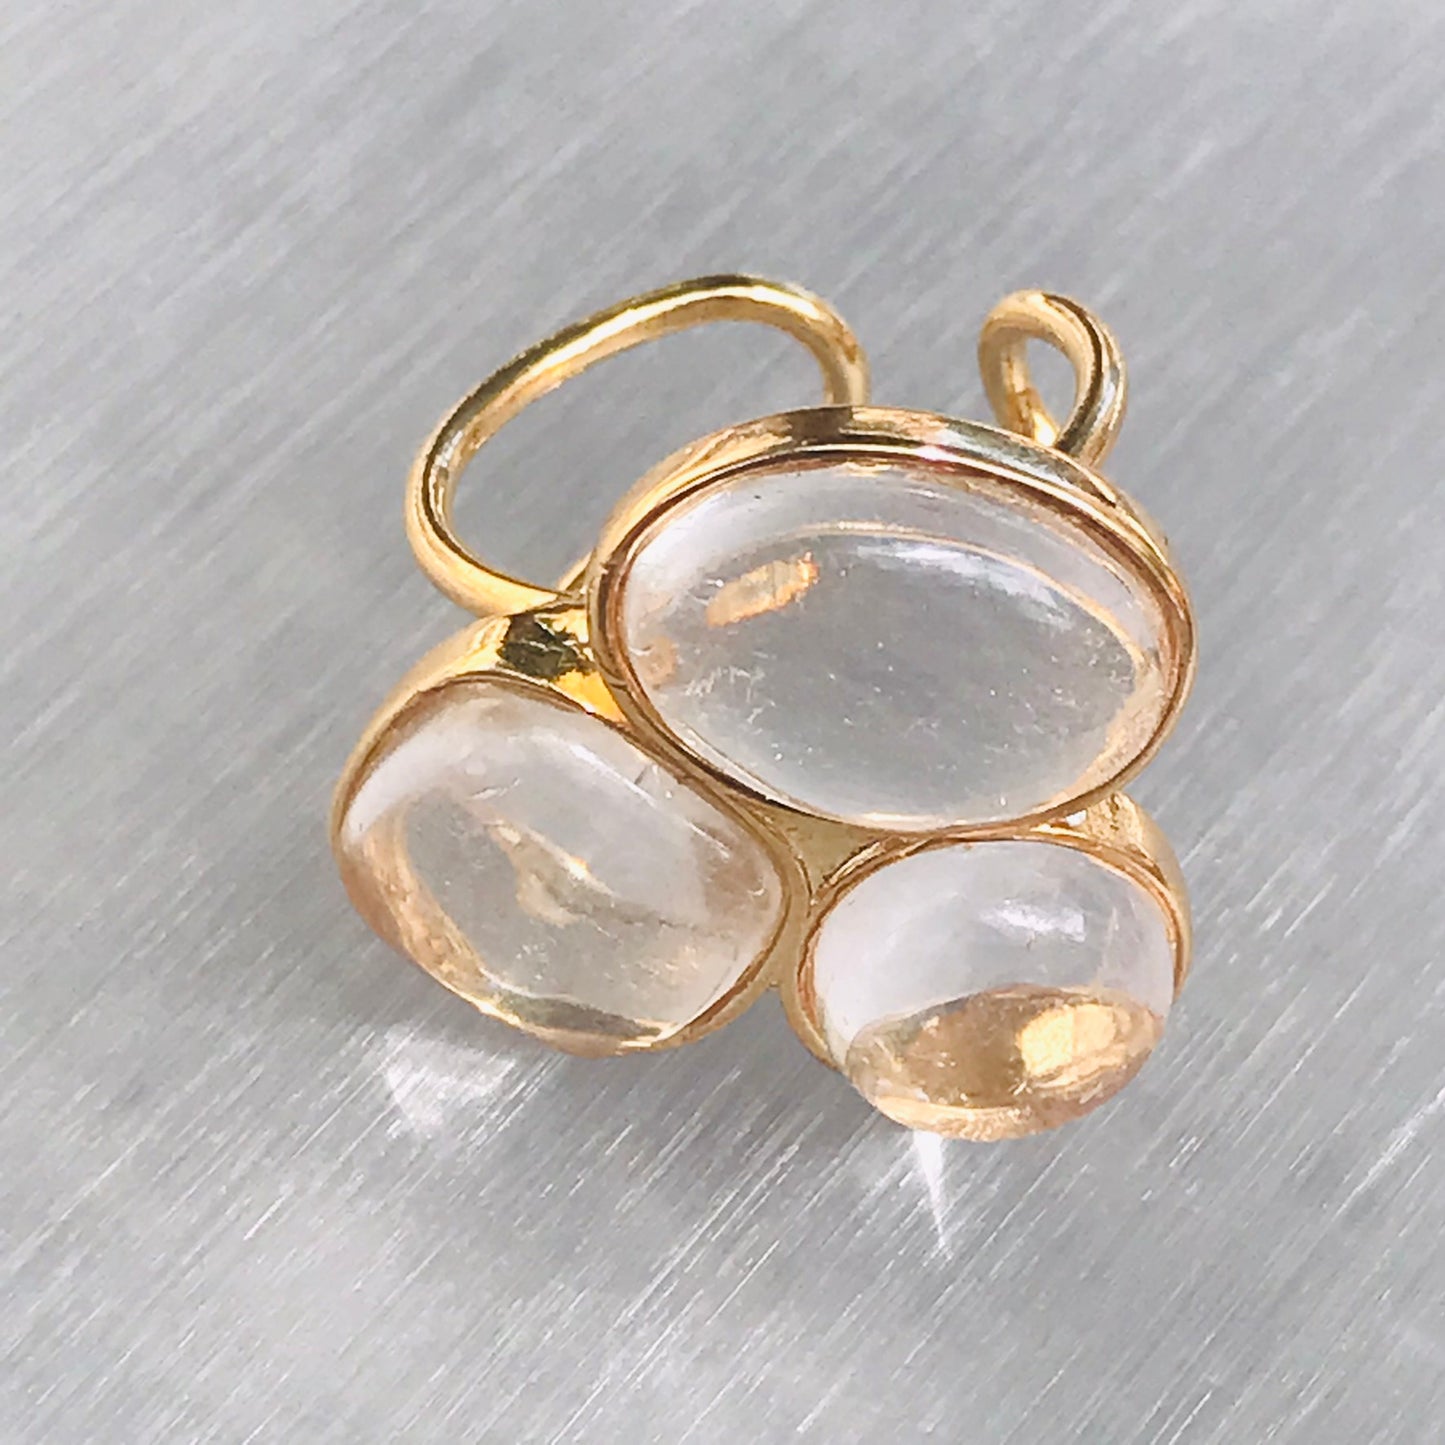 Three Gemstones Adjustable Ring - Crystal Quartz